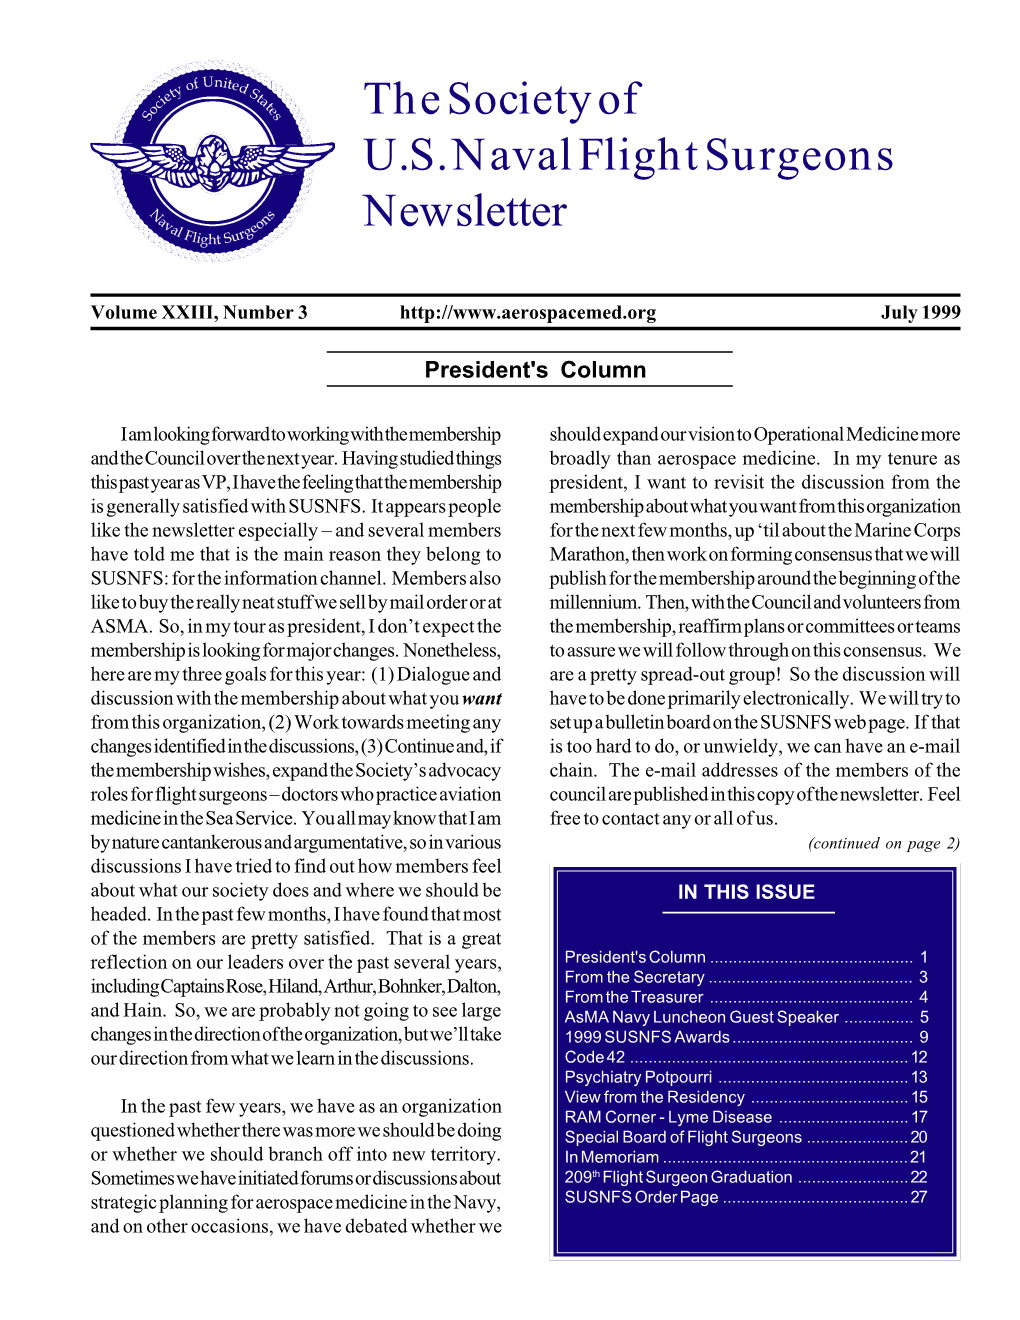 The Society of U.S. Naval Flight Surgeons Newsletter